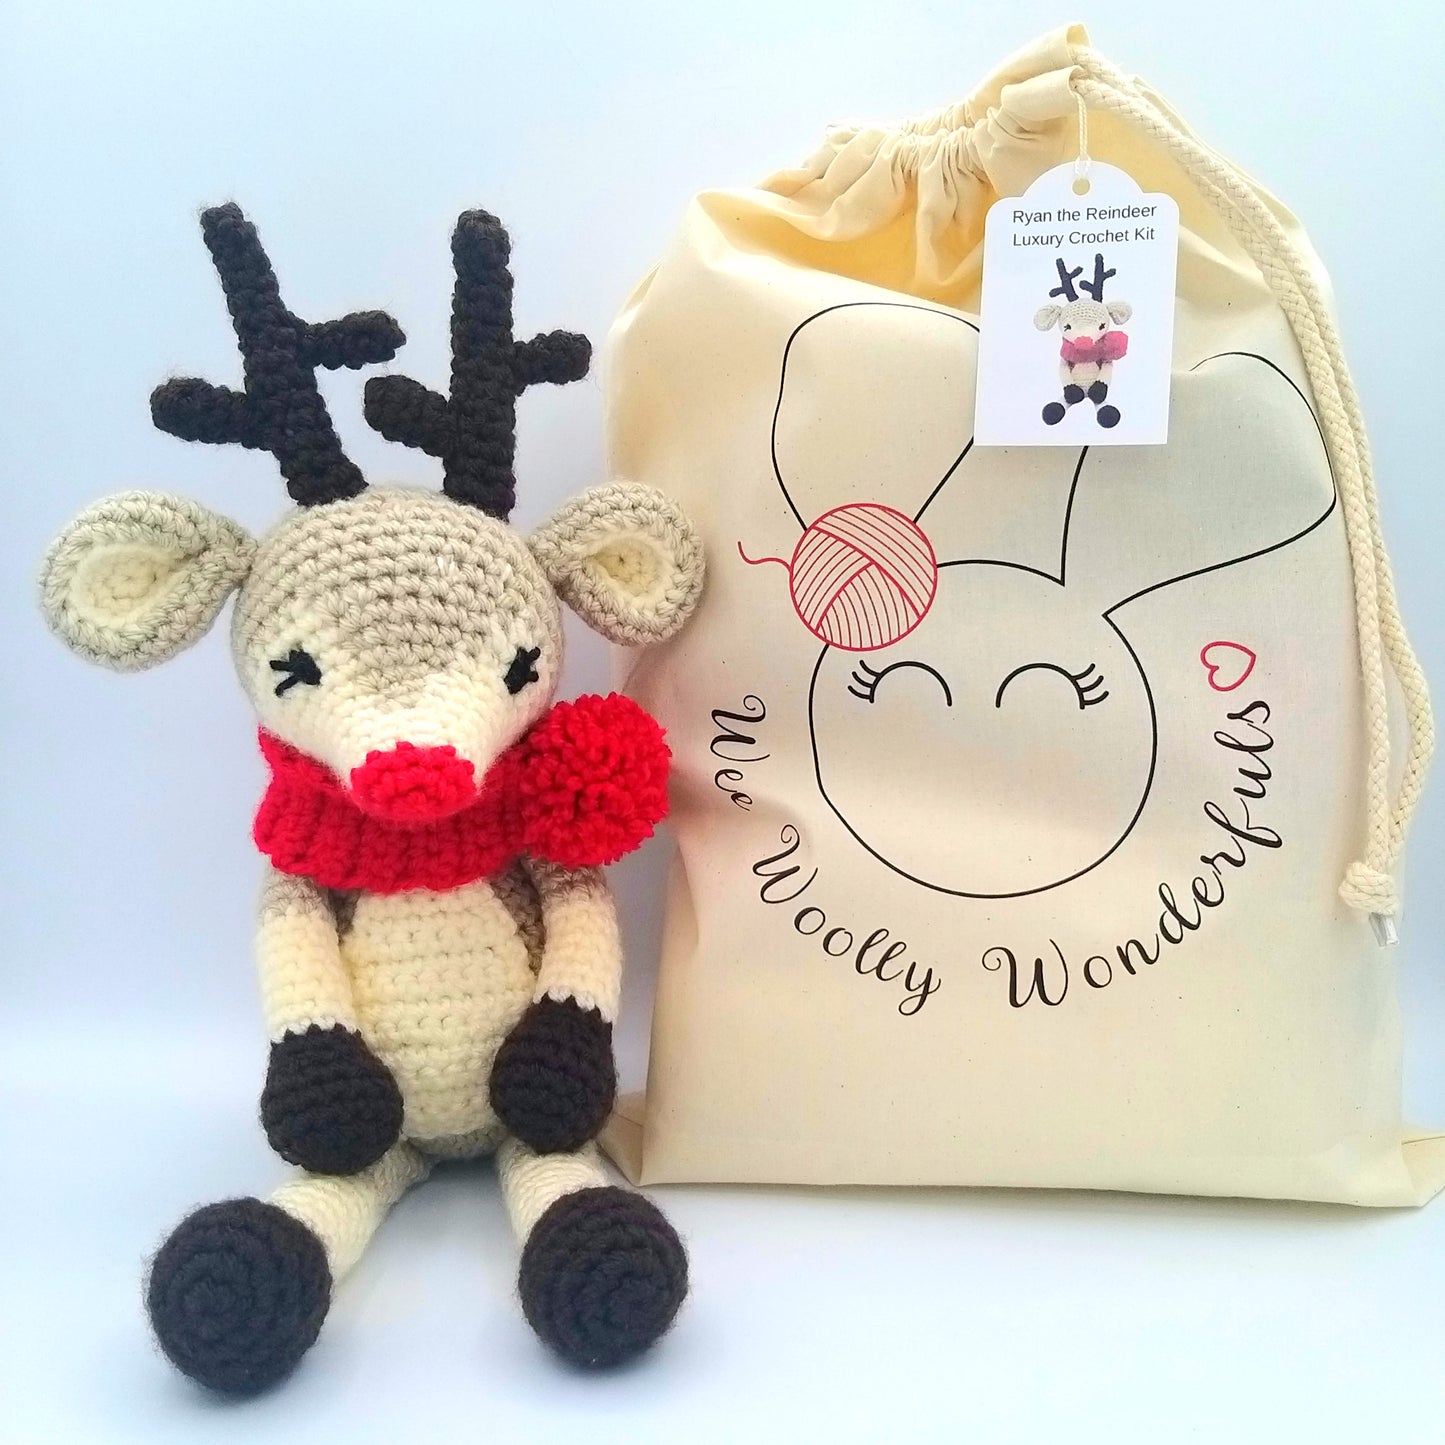 Reindeer Crochet Kit - Toy and Bag